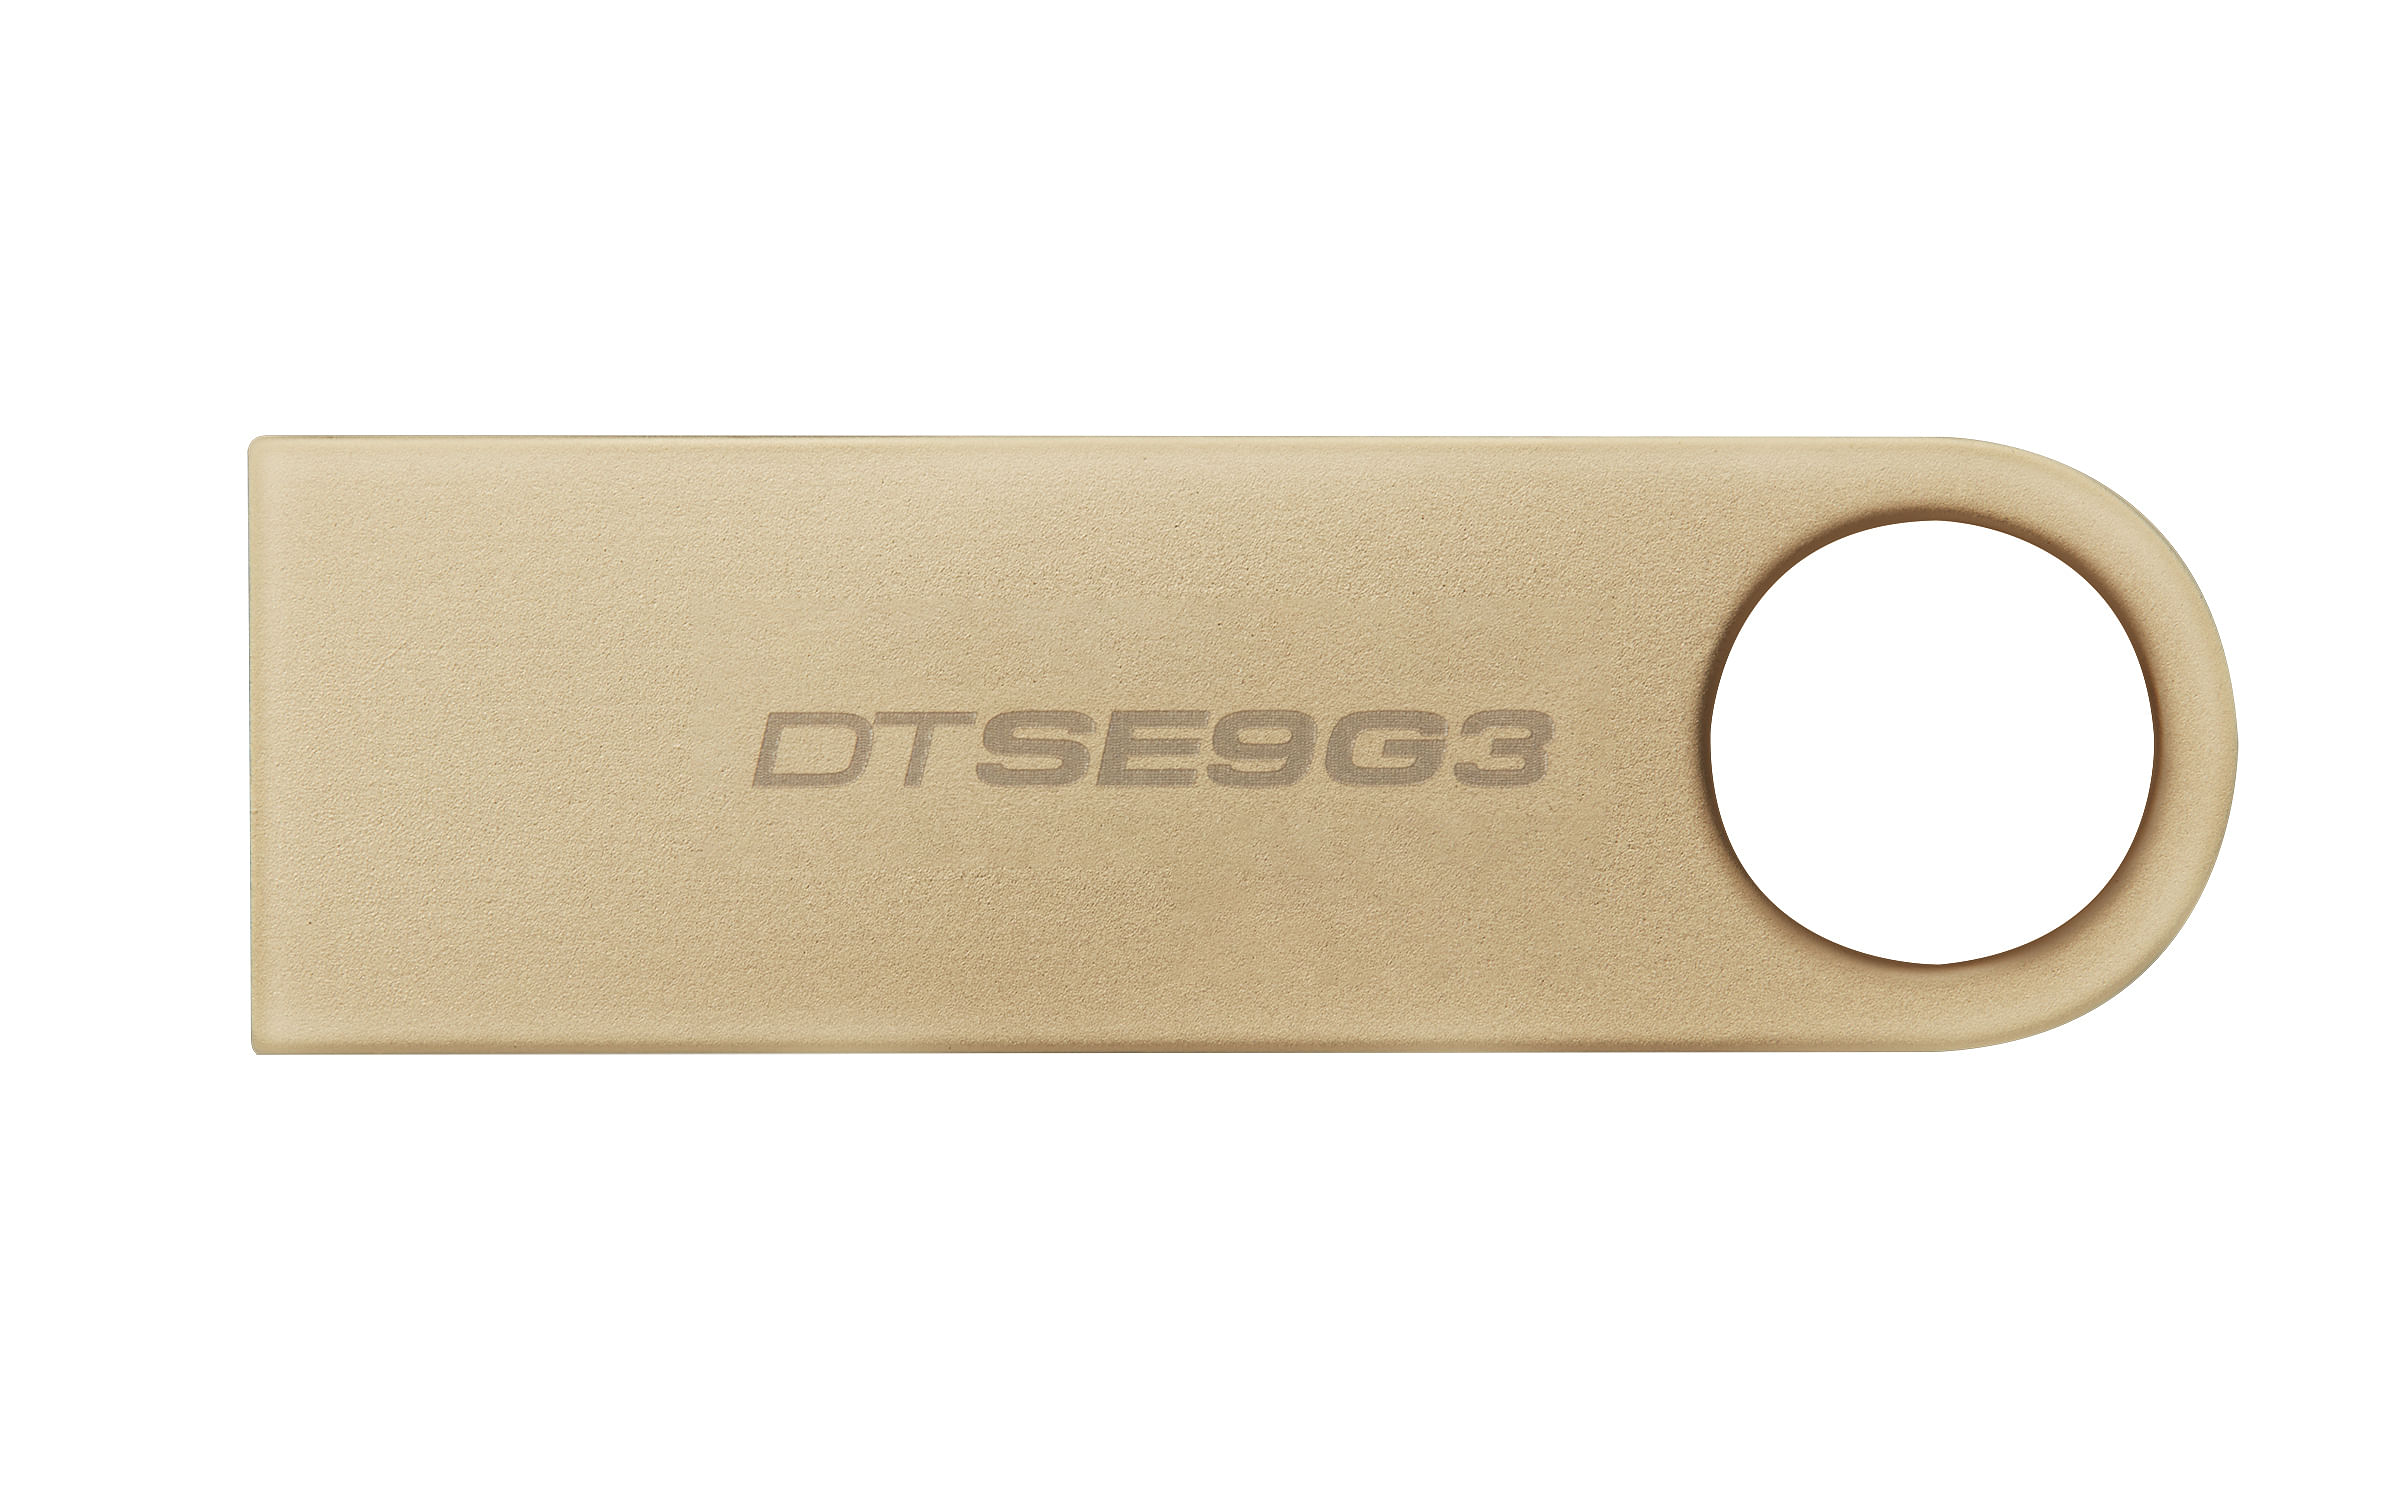 Kingston DataTraveler SE9 G3 512GB USB 3.2 Flash Drive